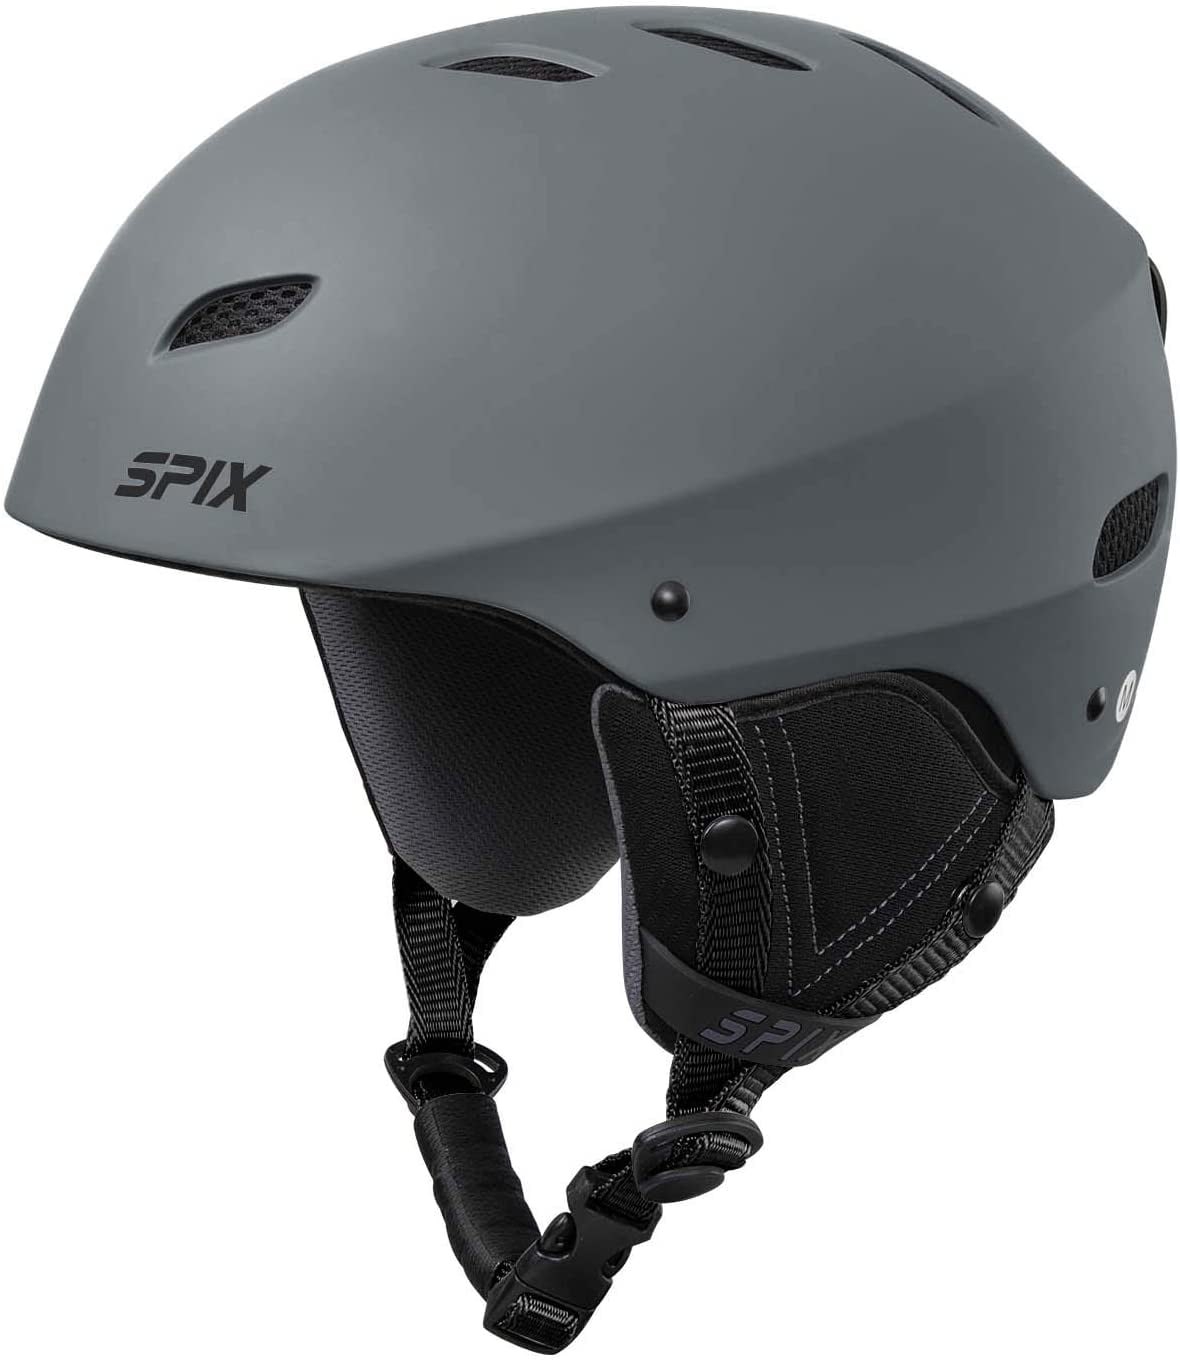 Ventilation Control Adjustable Comfortable Removable Liner Certified Safety Quality Snowboard & Ski Helmet for Men Women Youth Unisex 